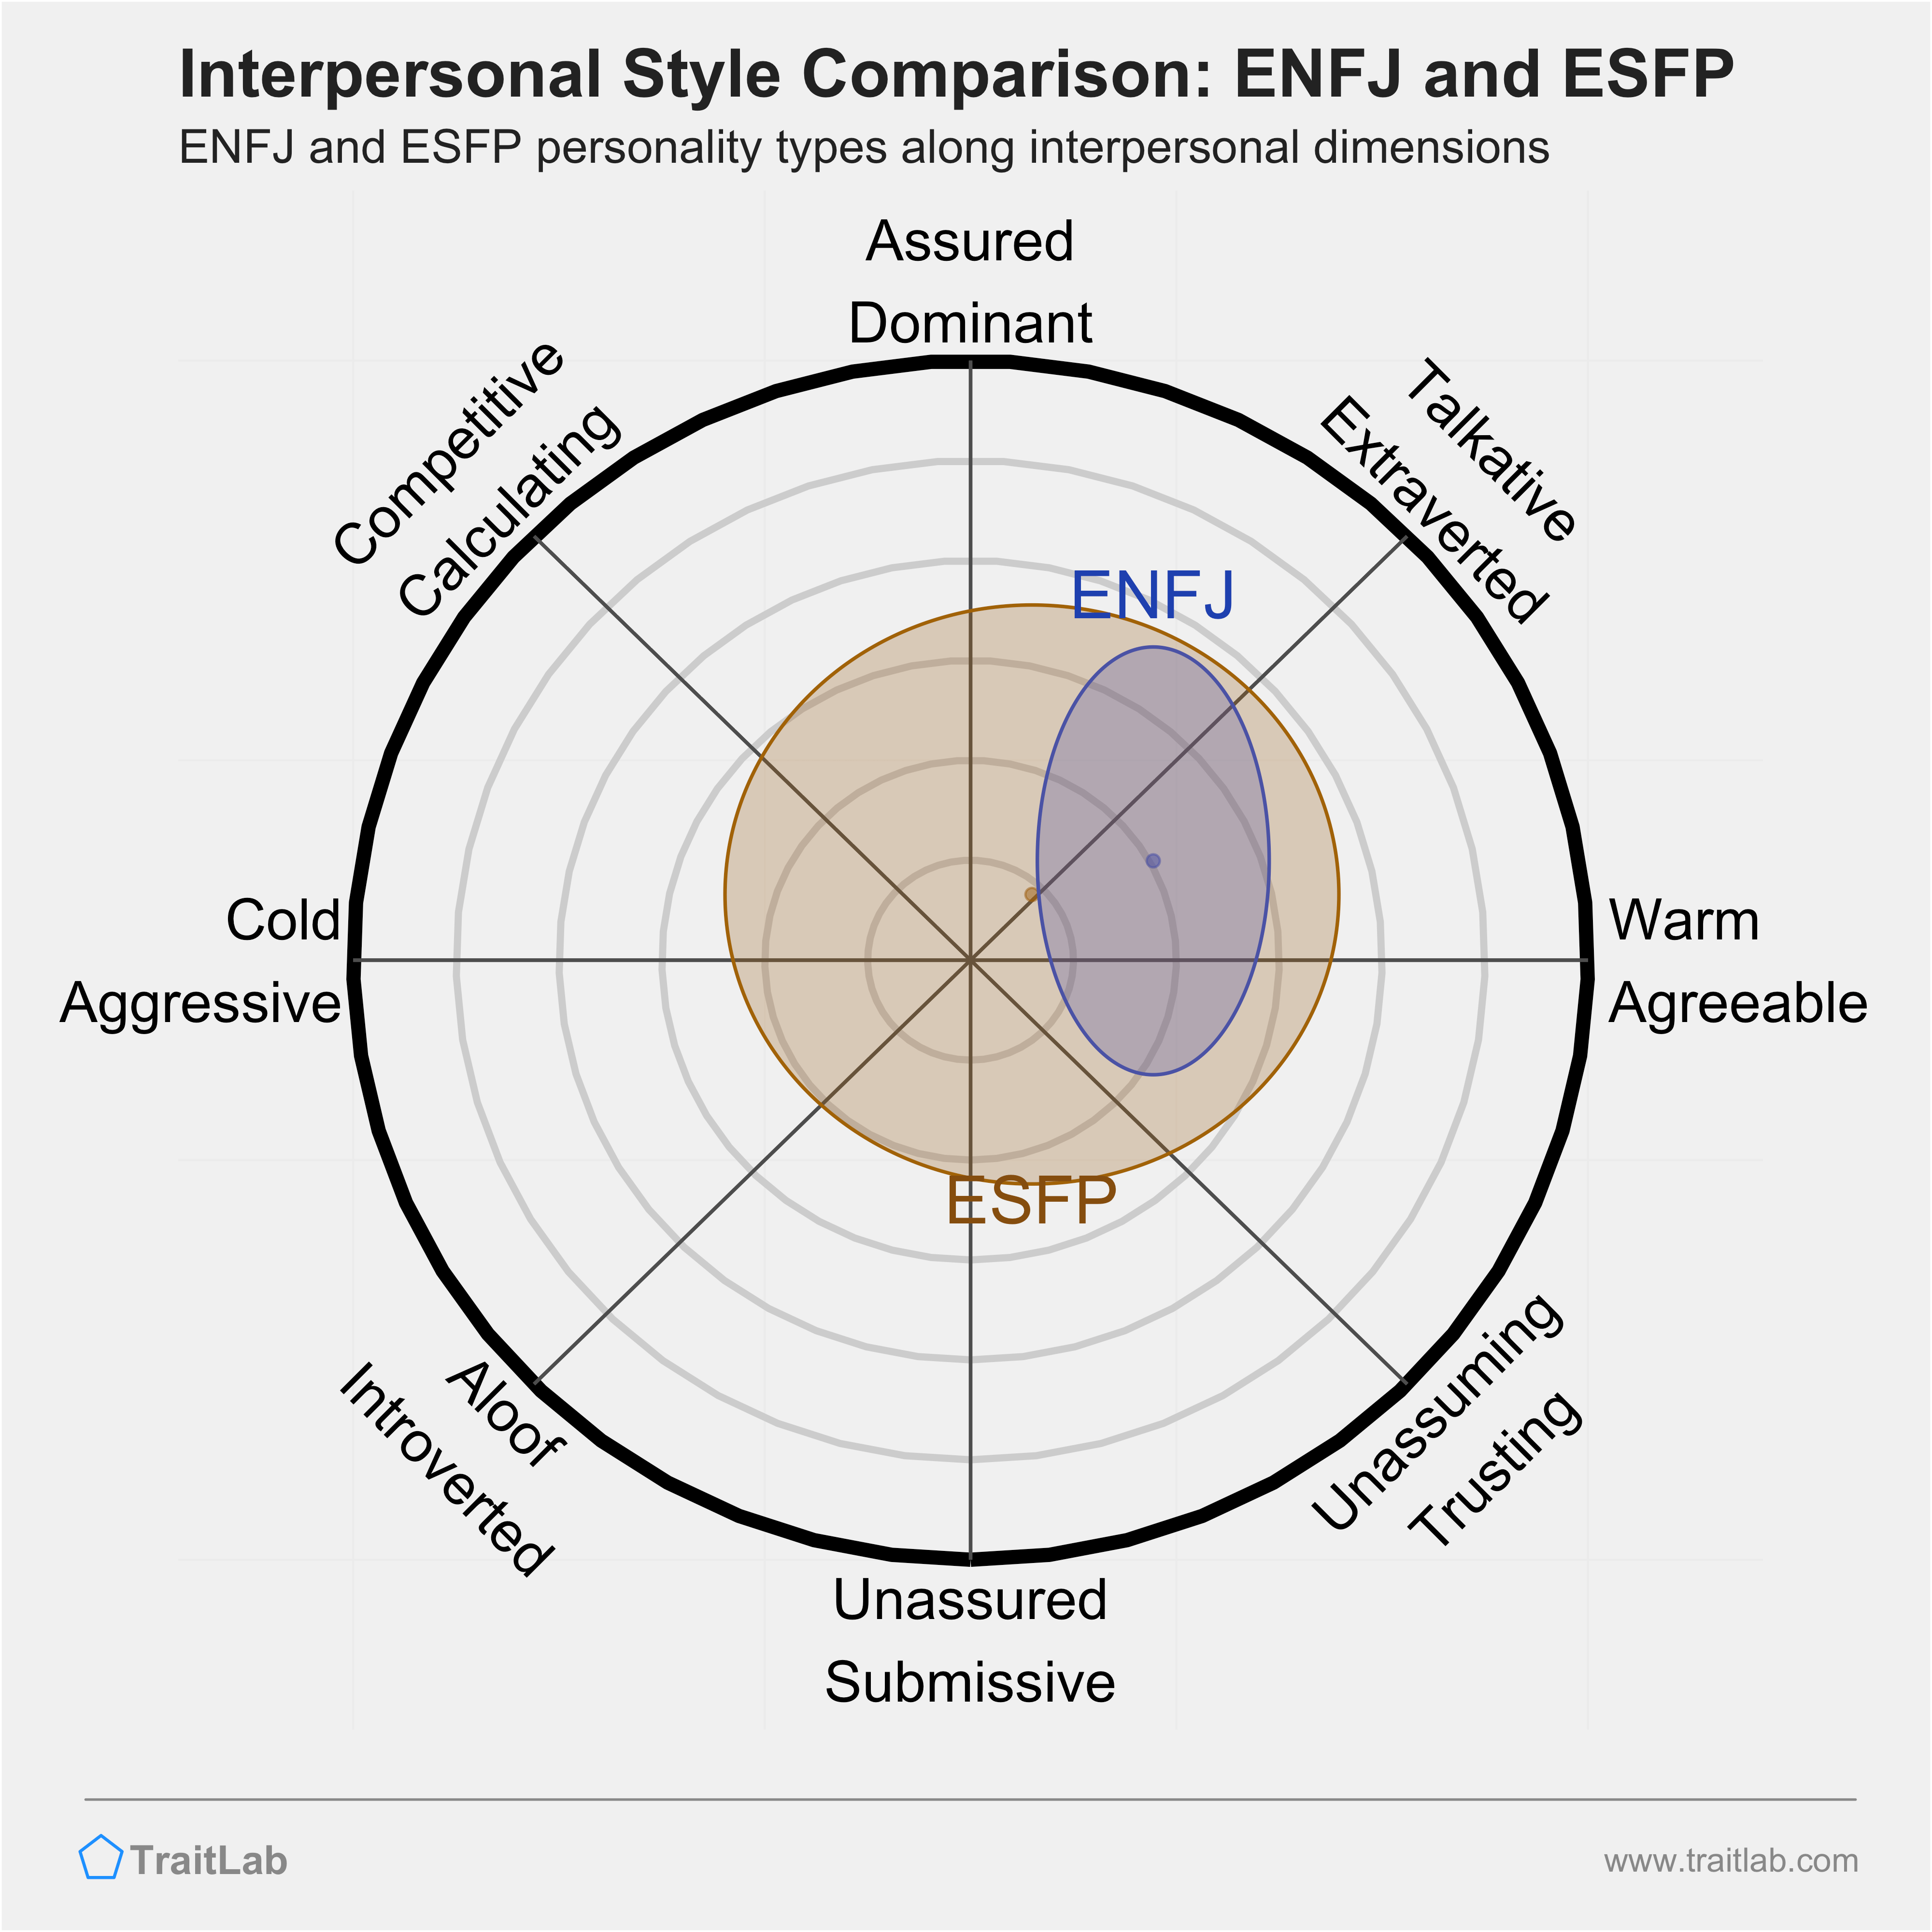 ENFJ and ESFP comparison across interpersonal dimensions